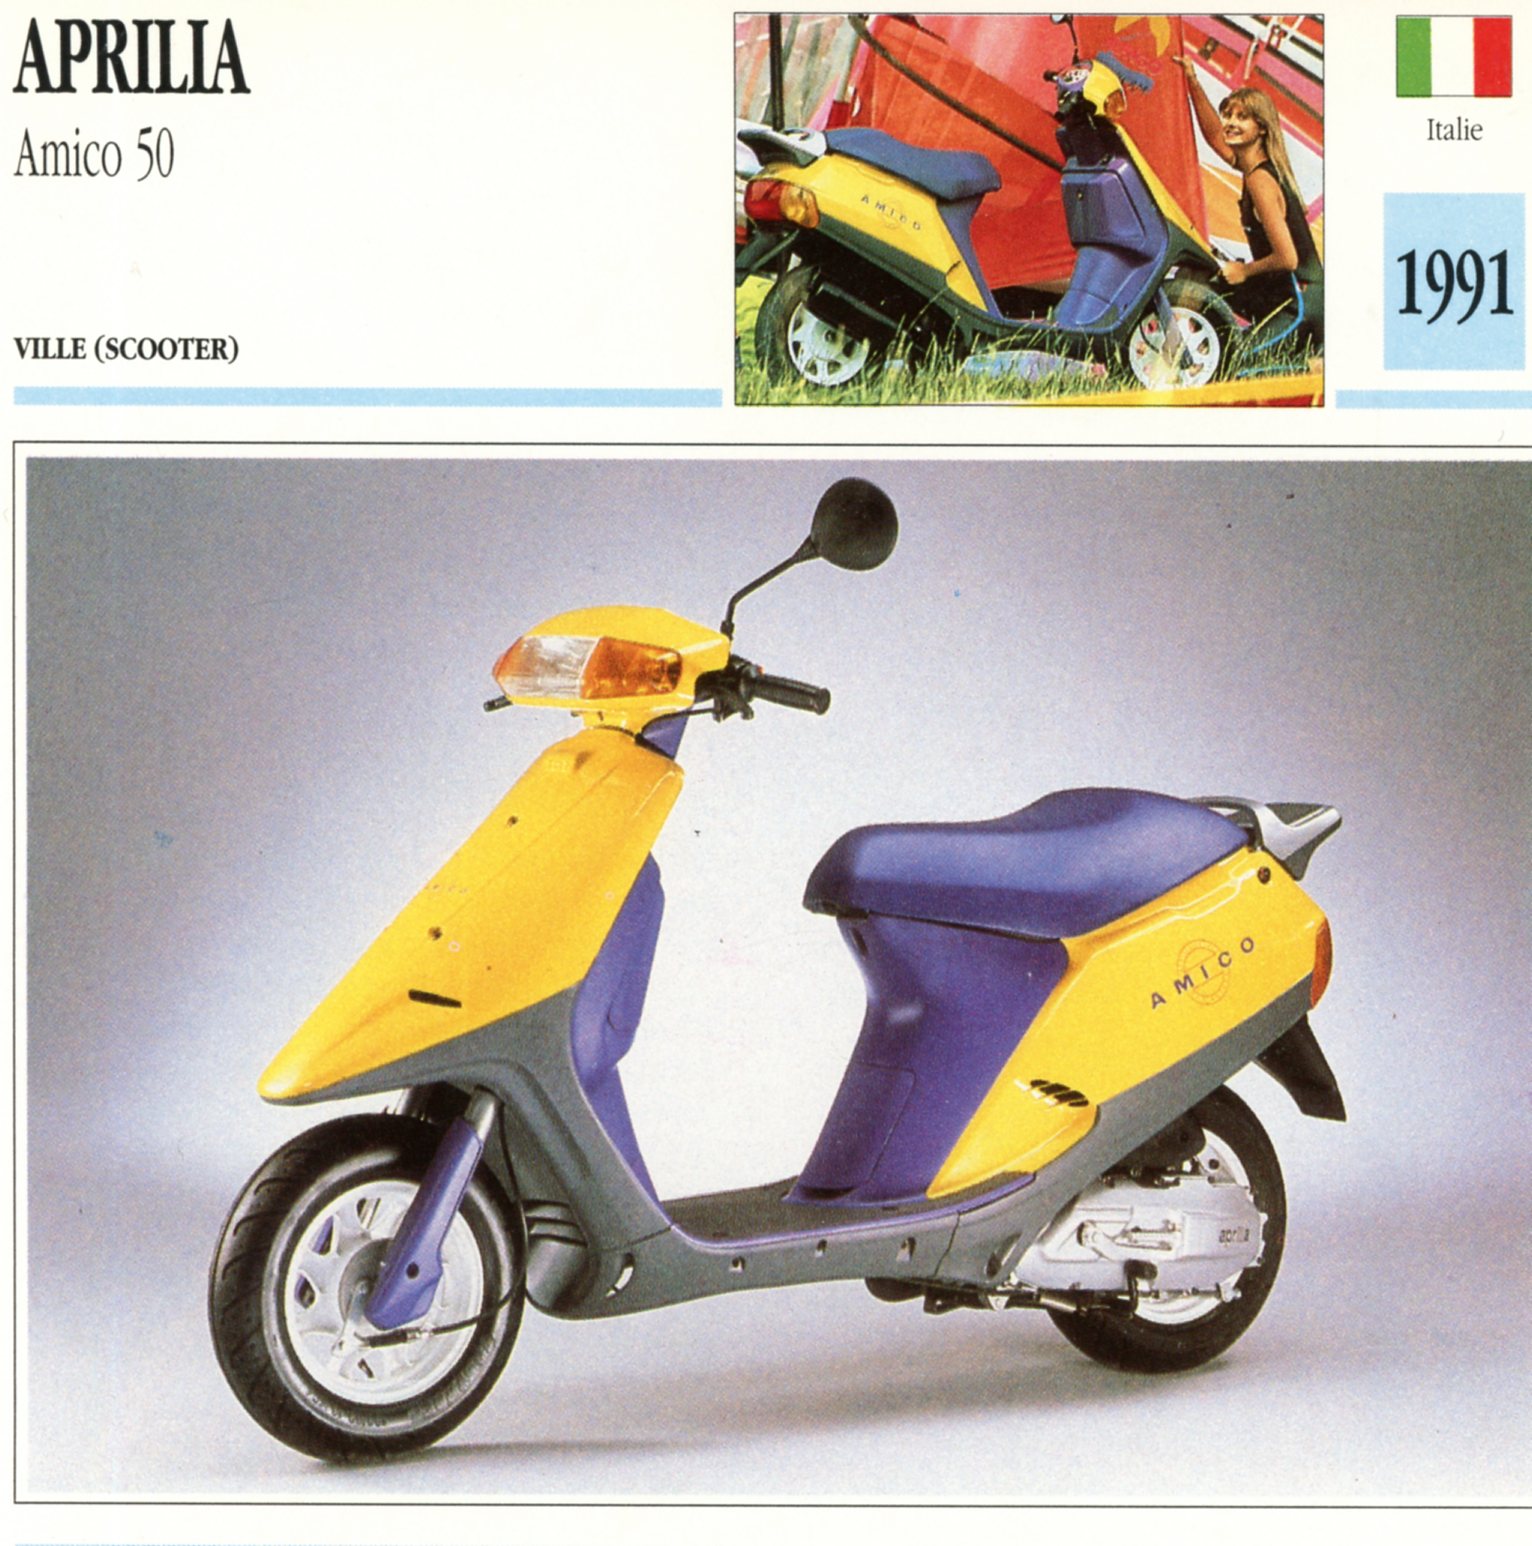 APRILIA 50 AMICO 1991 - CARTE CARD FICHE SCOOTER CARACTERISTIQUES